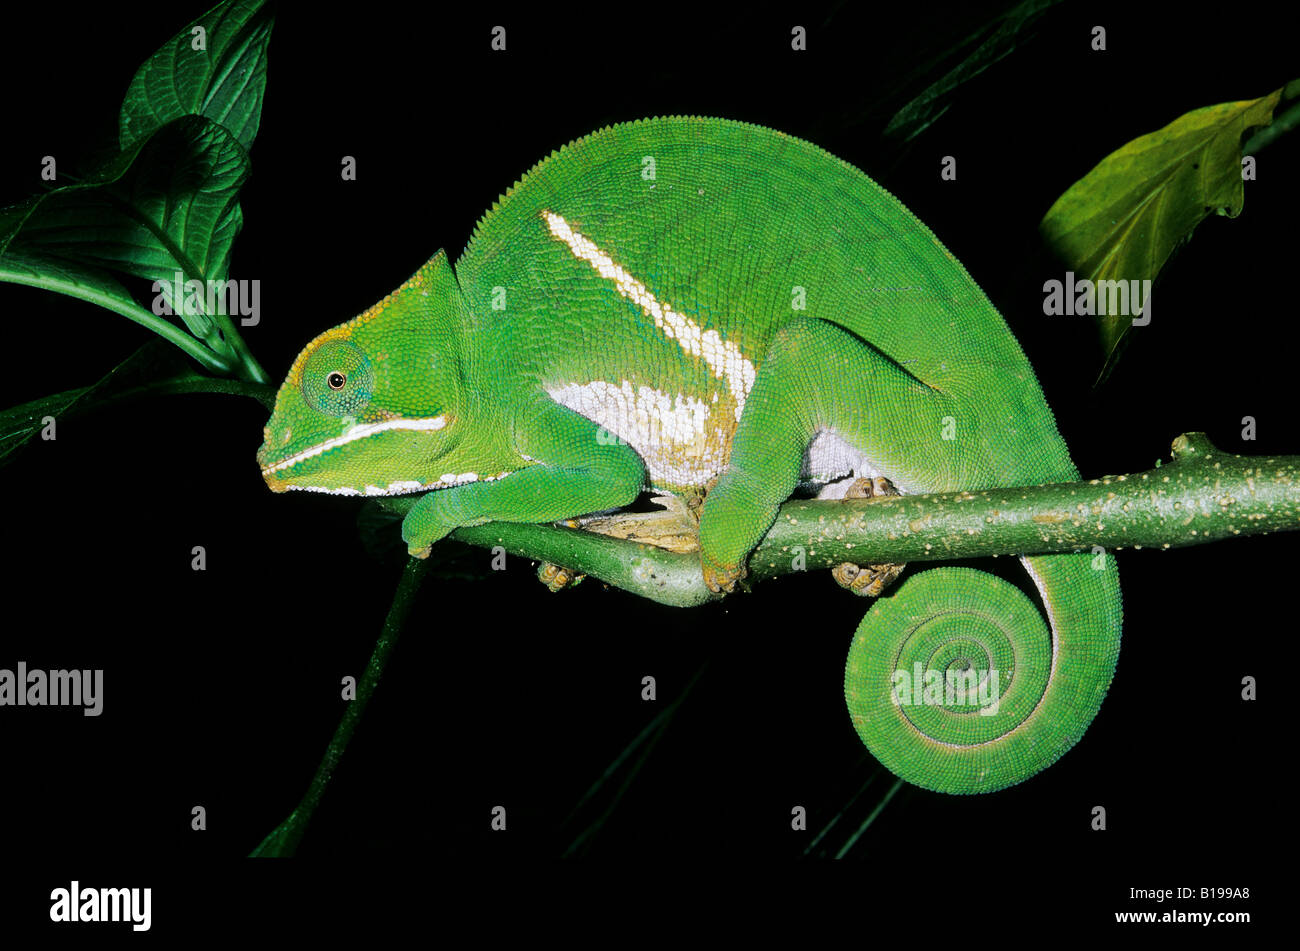 Balteatus chameleon (Furcifer balteatus), Madagascar Stock Photo